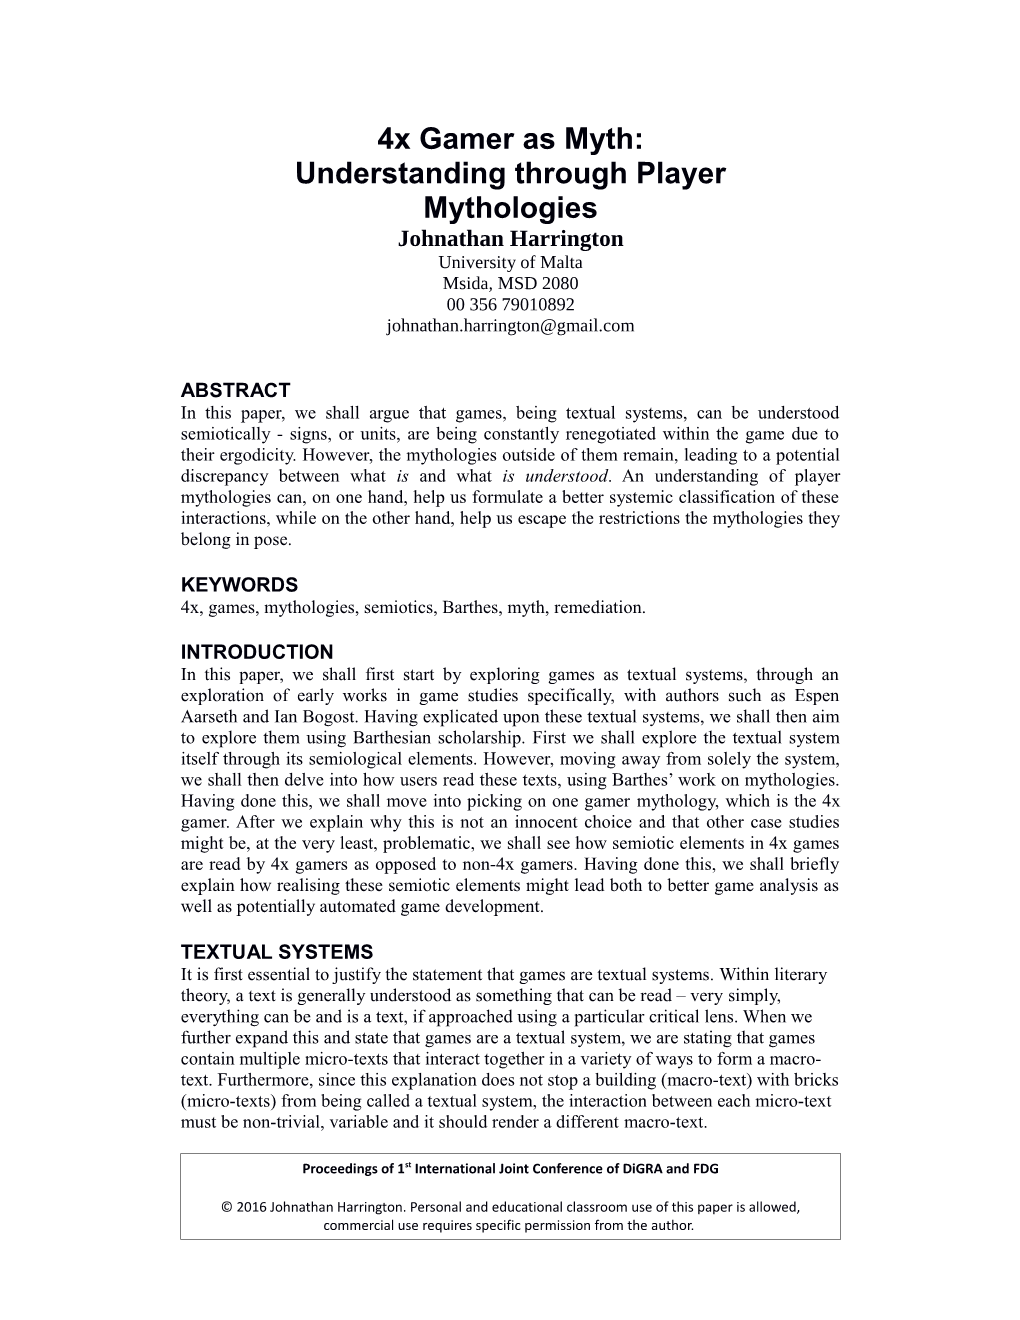 4X Gamer As Myth: Understanding Through Player Mythologies Johnathan Harrington University of Malta Msida, MSD 2080 00 356 79010892 Johnathan.Harrington@Gmail.Com